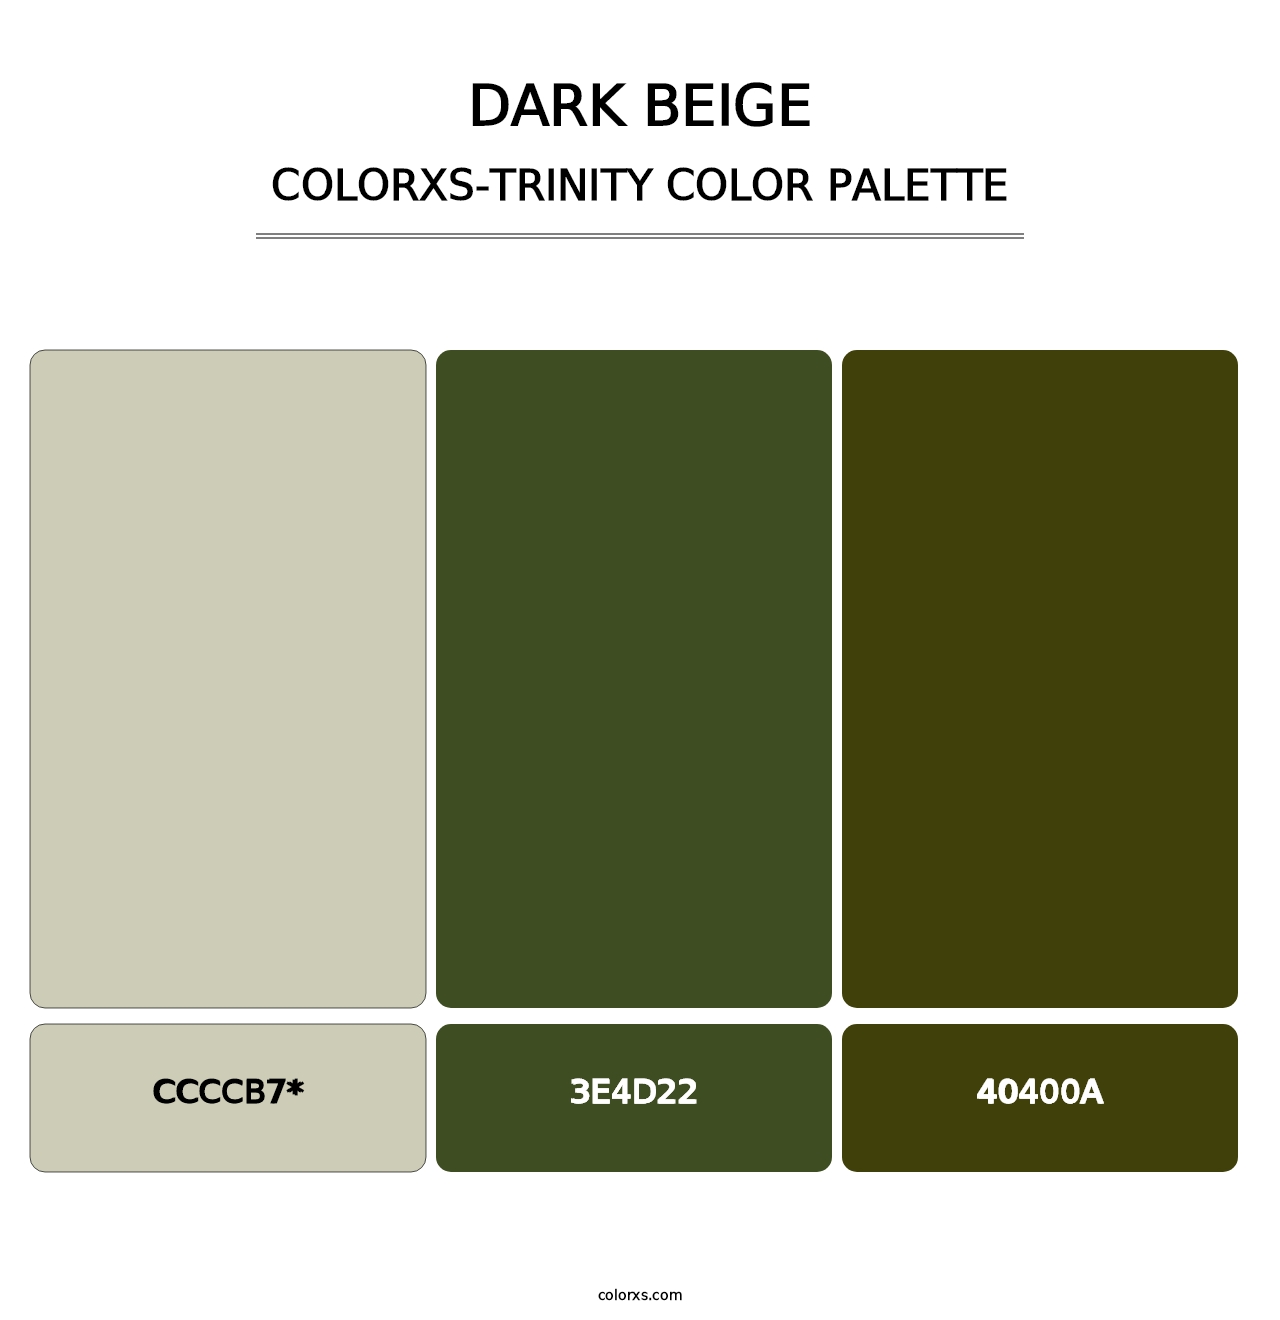 Dark Beige - Colorxs Trinity Palette